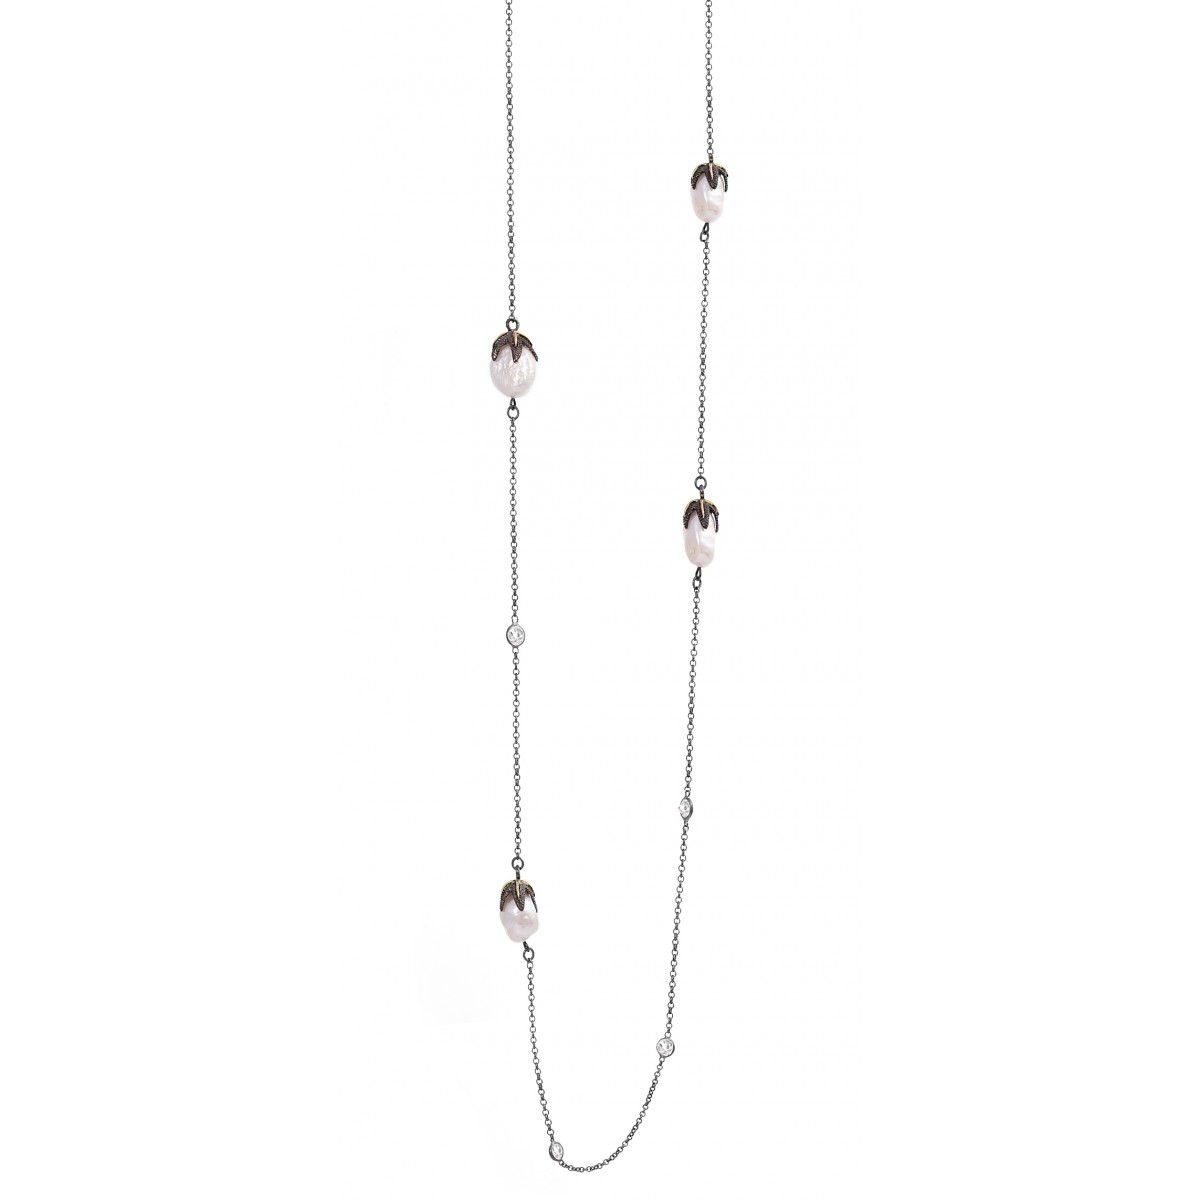 Buy Luxury Pearl Necklace in Silver Necklaces